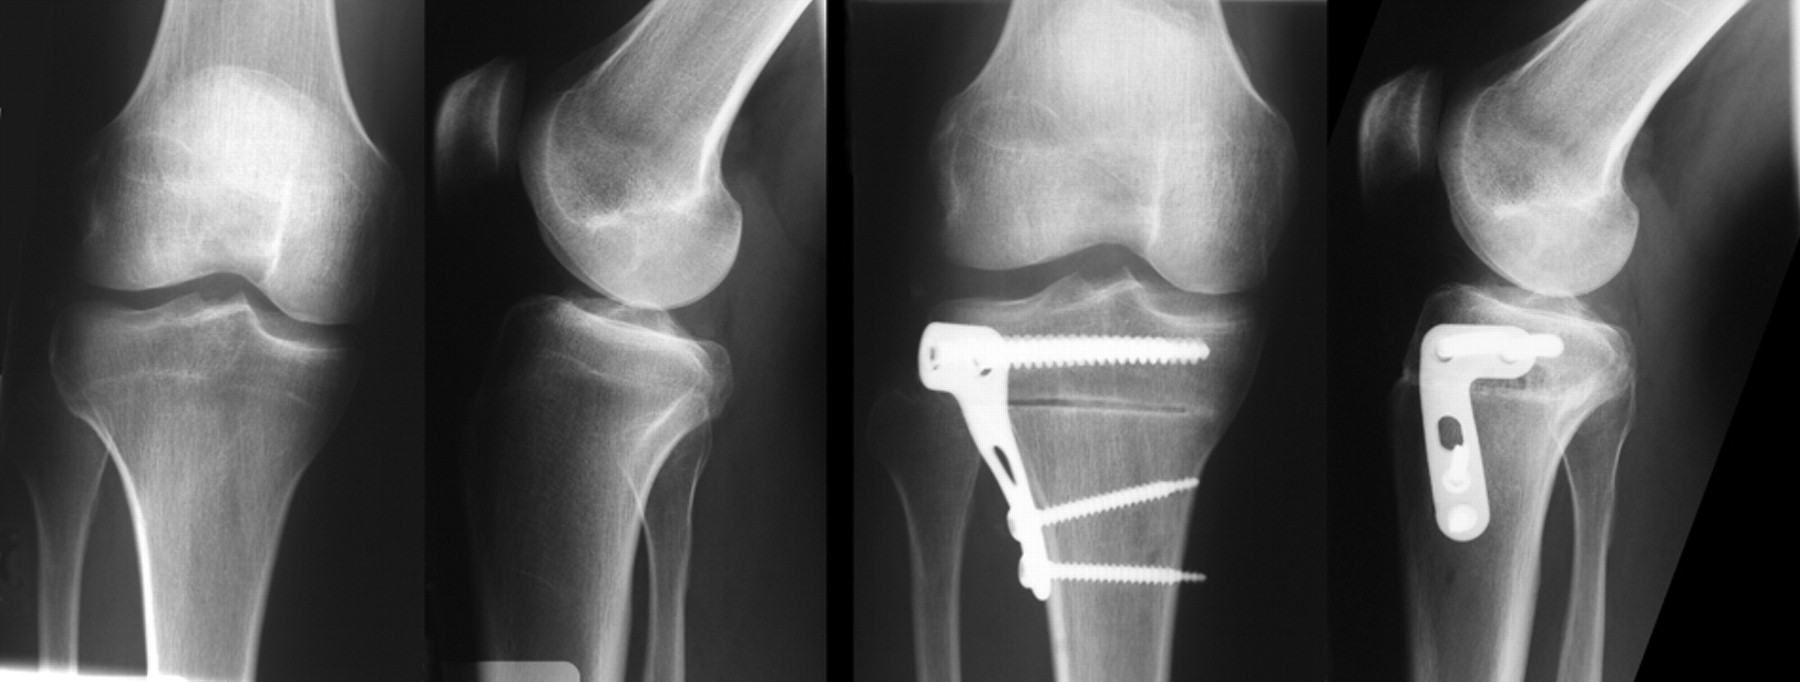 High Tibial Osteotomy Procedure For Knee Arthritis